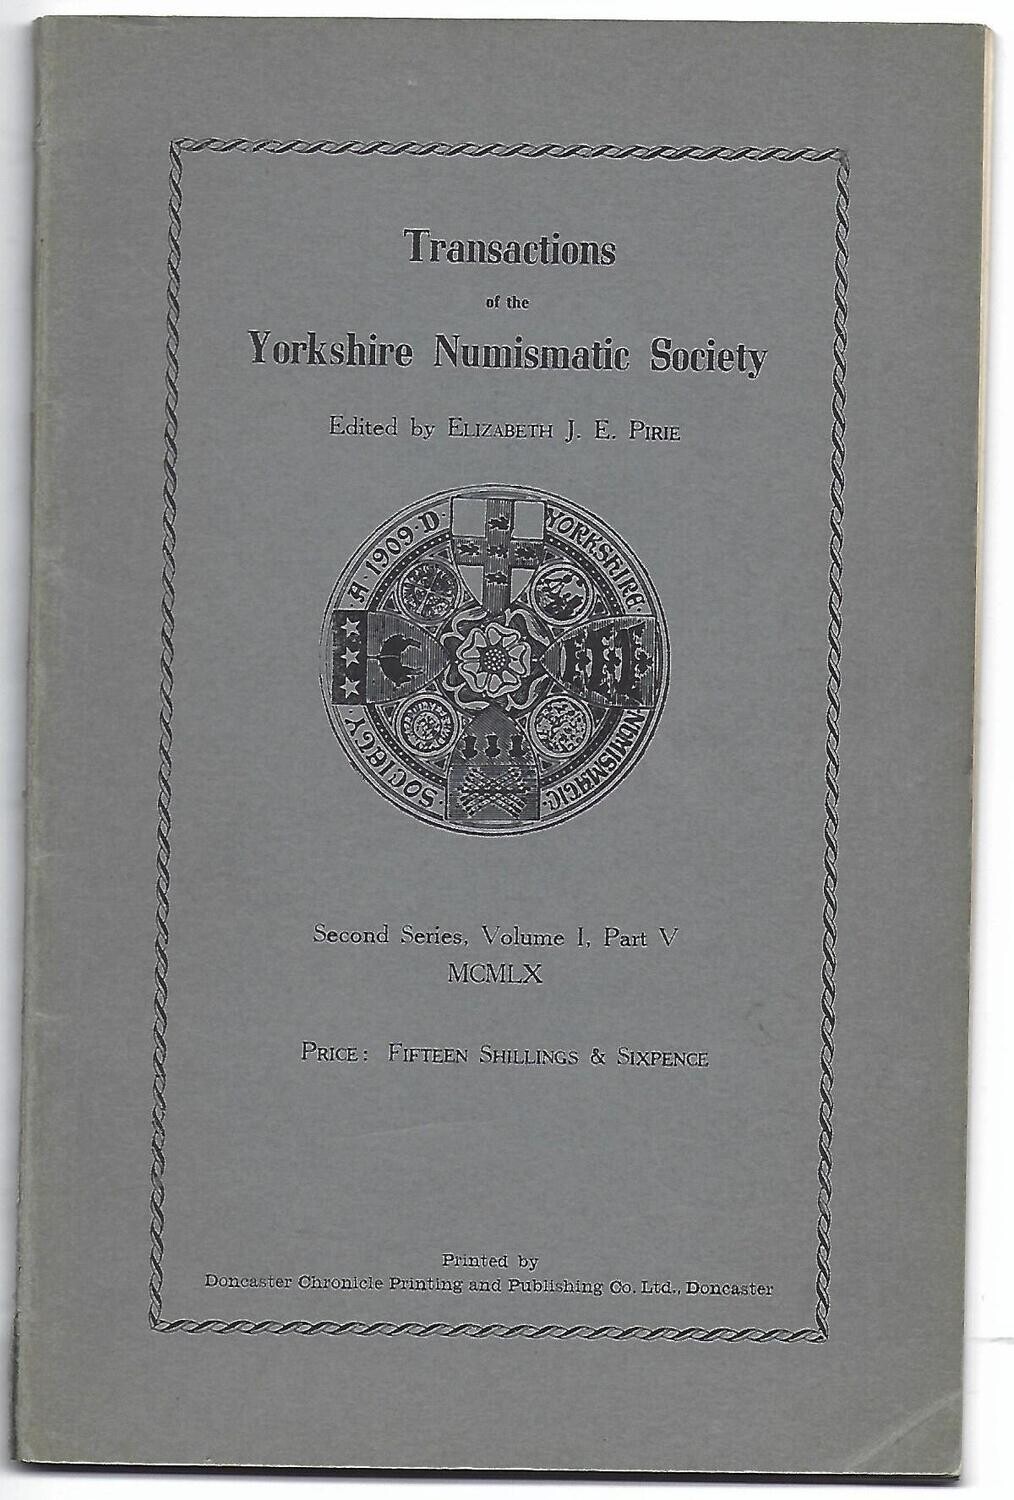 Journal; Elizabeth J. E. Pirie (ed.), "Transactions of the Yorkshire Numismatic Society." 2nd series,, volume I, part V, (1960)